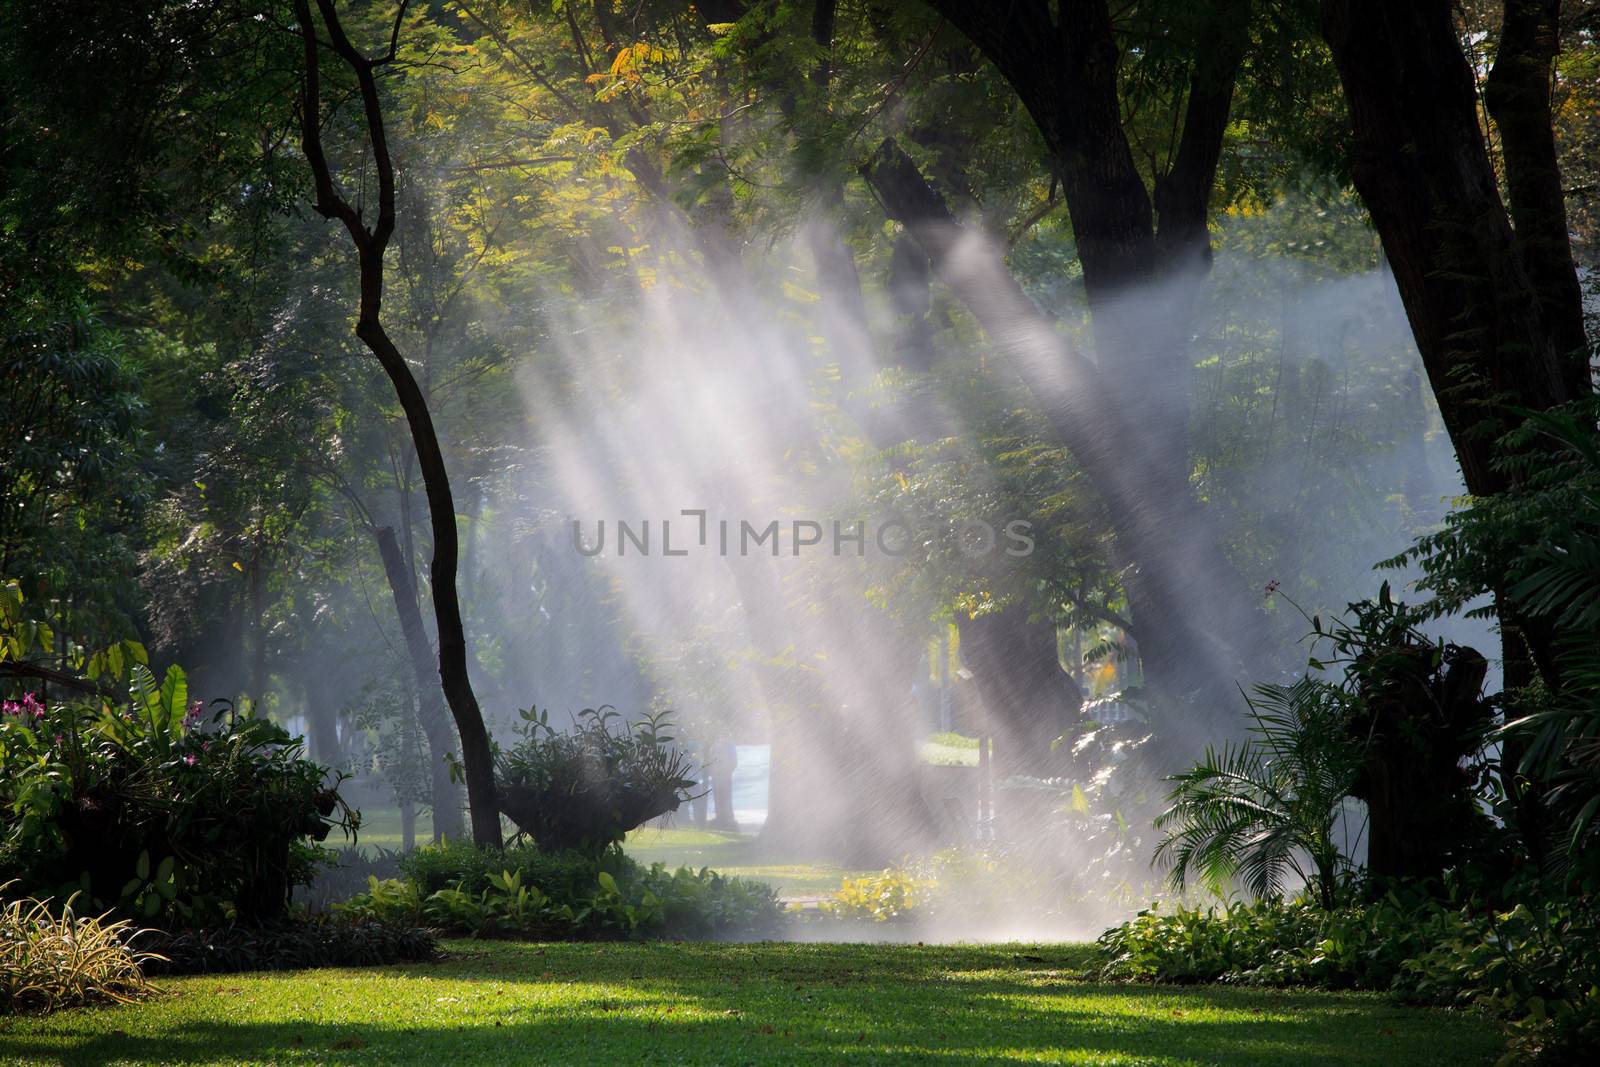 water sprau amd light in public park  by khunaspix